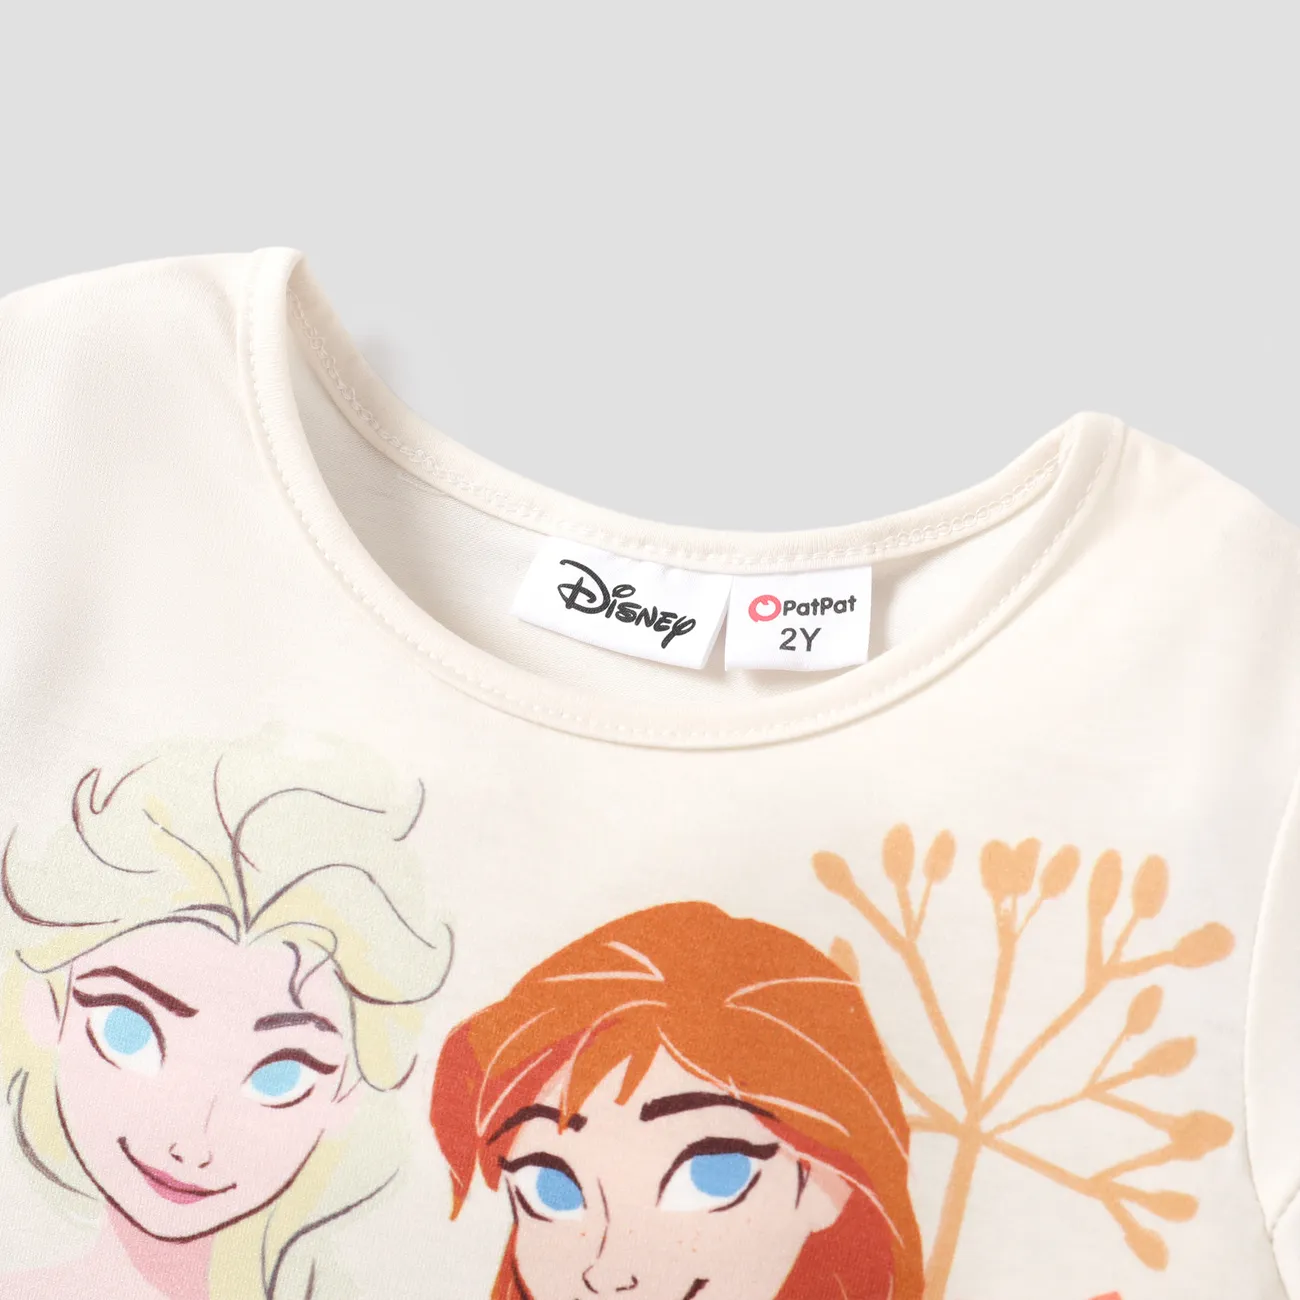 Disney Frozen 2 unidades Criança Menina Extremidades franzidas Infantil conjuntos de camisetas Cor Bege big image 1